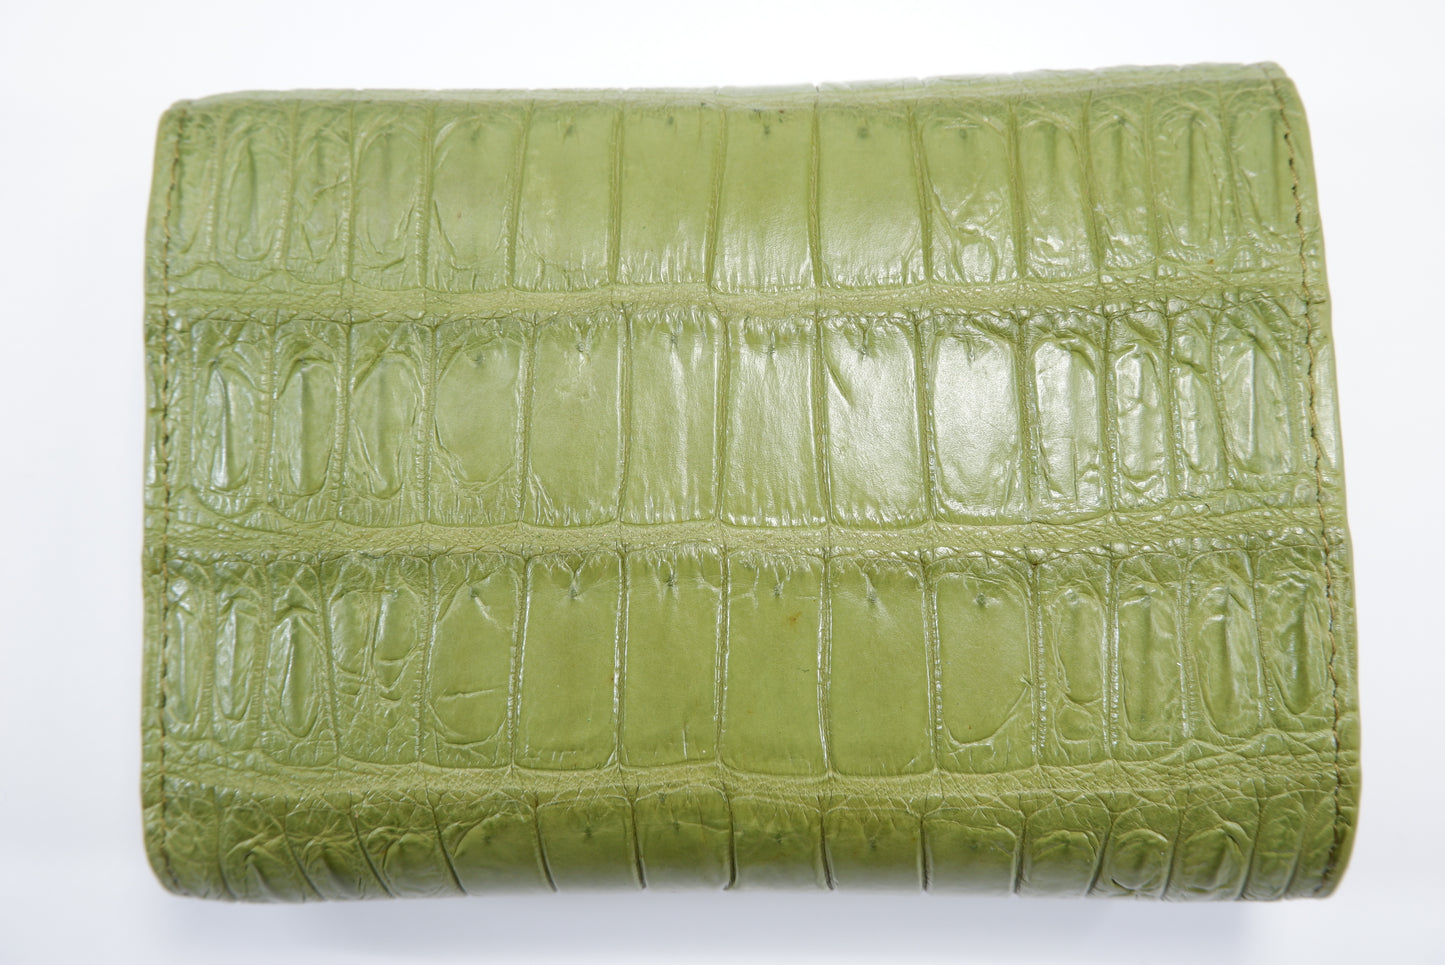 Genuine Crocodile Belly Skin Leather Medium Envelope Trifold Clutch Wallet Purse